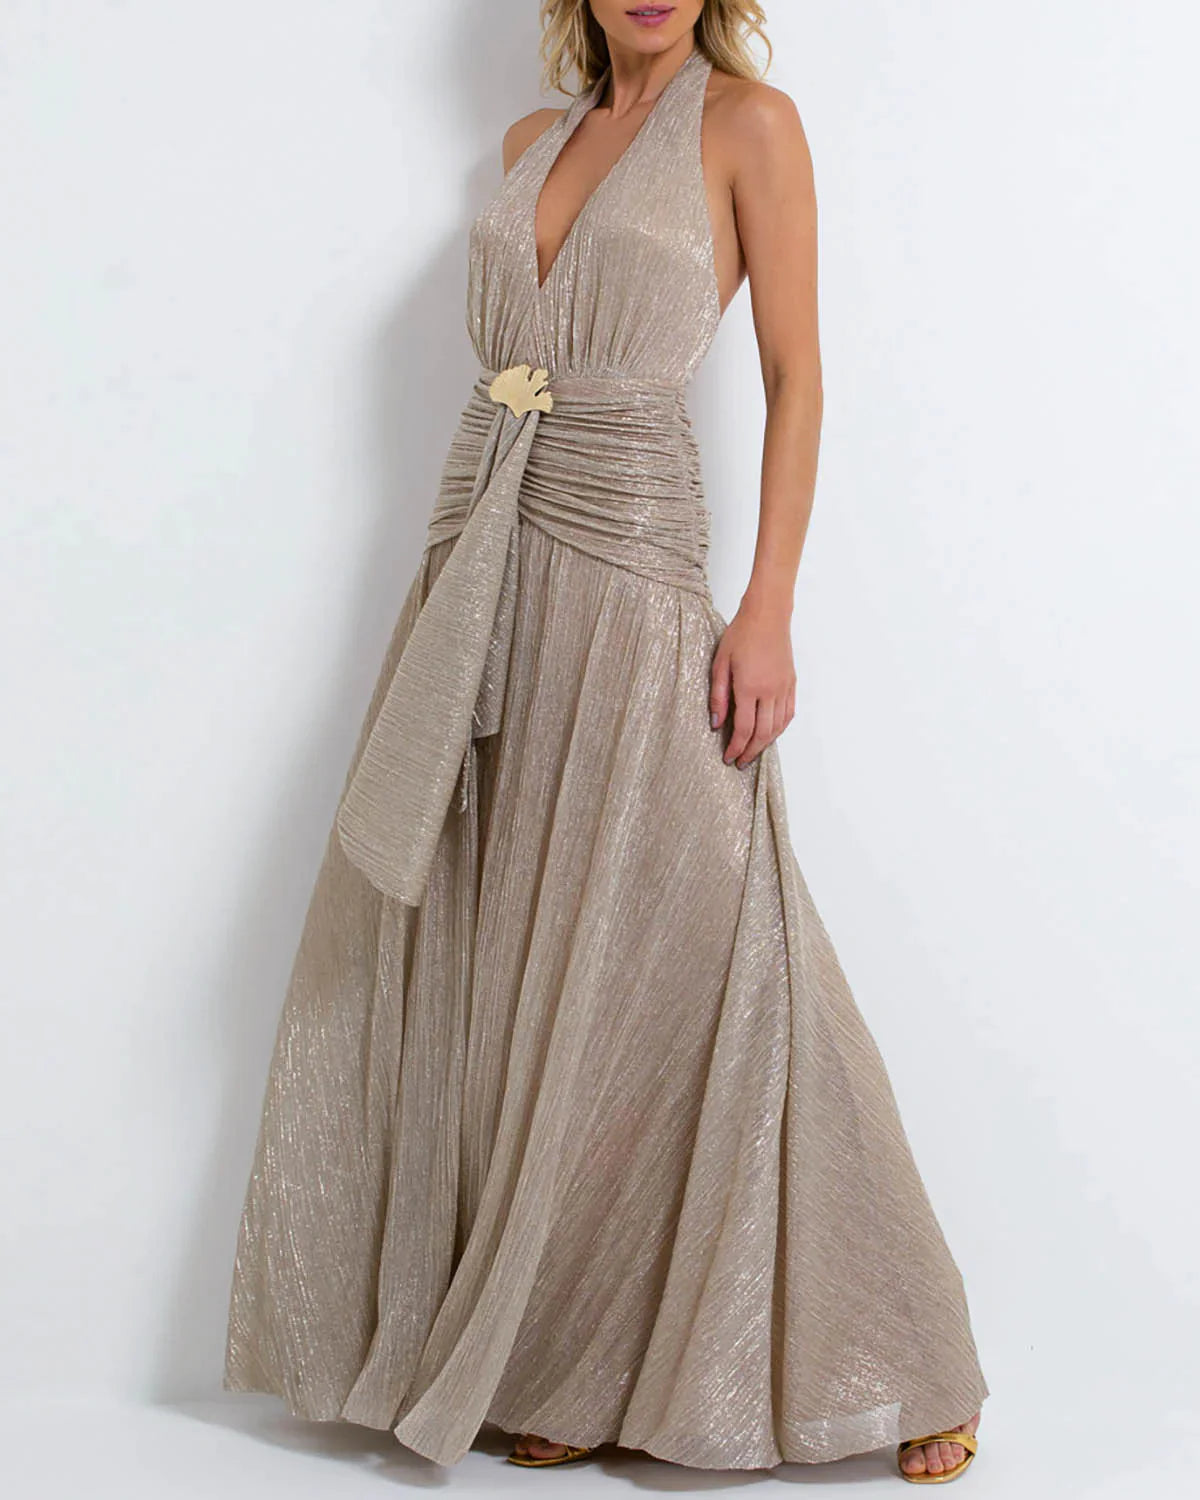 PatBo Lurex Draped Maxi Dress - Premium Long dress from Marina St Barth - Just $850.00! Shop now at Marina St Barth